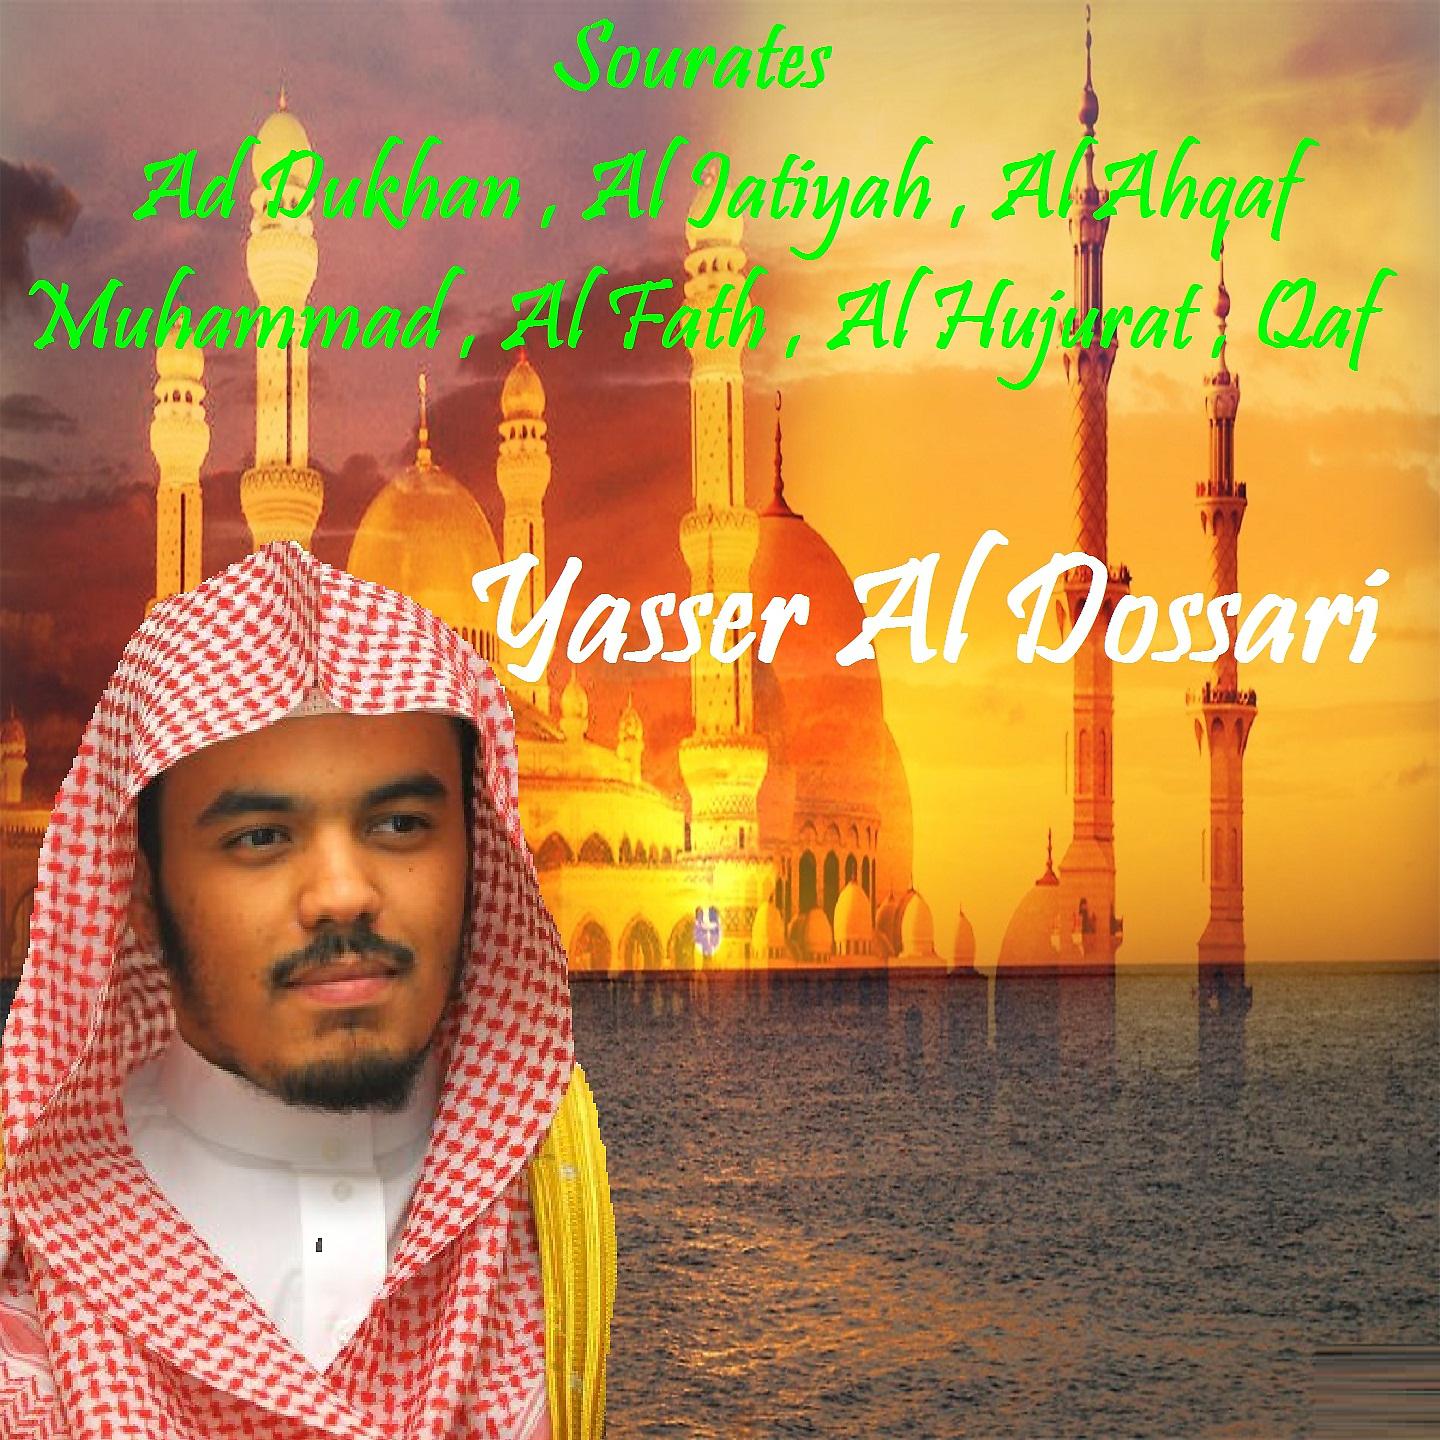 Постер альбома Sourates Ad Dukhan , Al Jatiyah ,  Al Ahqaf , Muhammad , Al Fath , Al Hujurat , Qaf